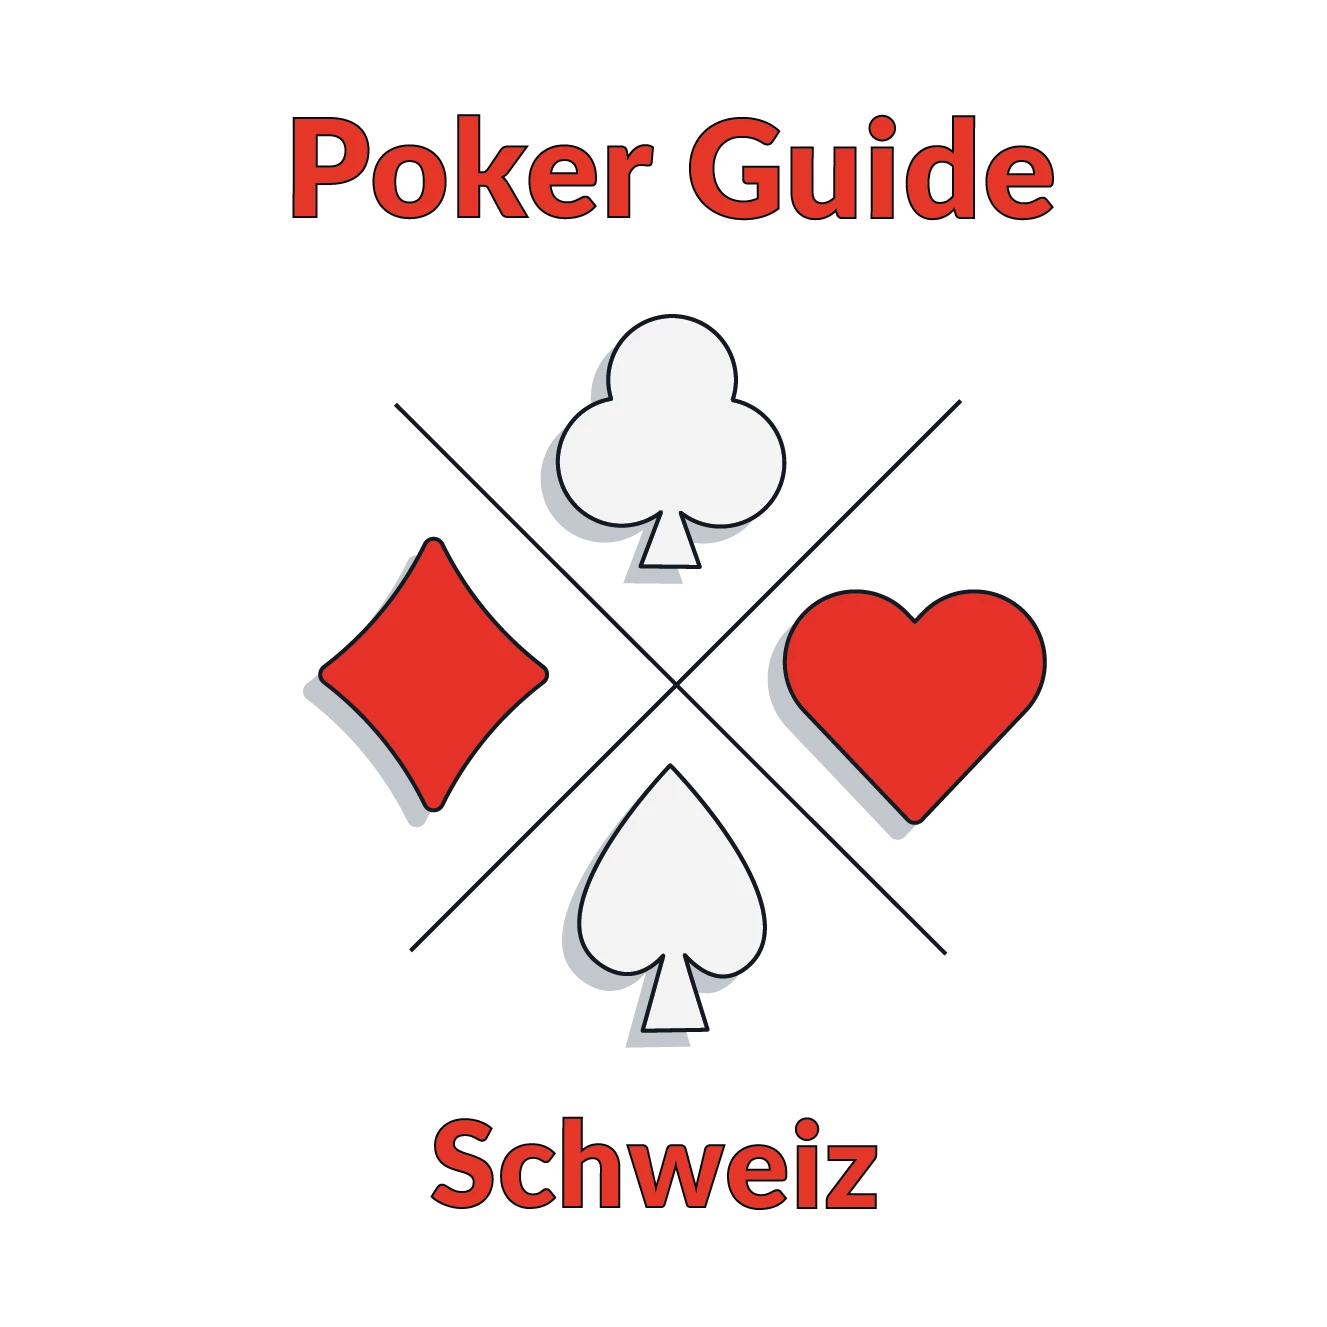 Poker Guide Online Poker featured